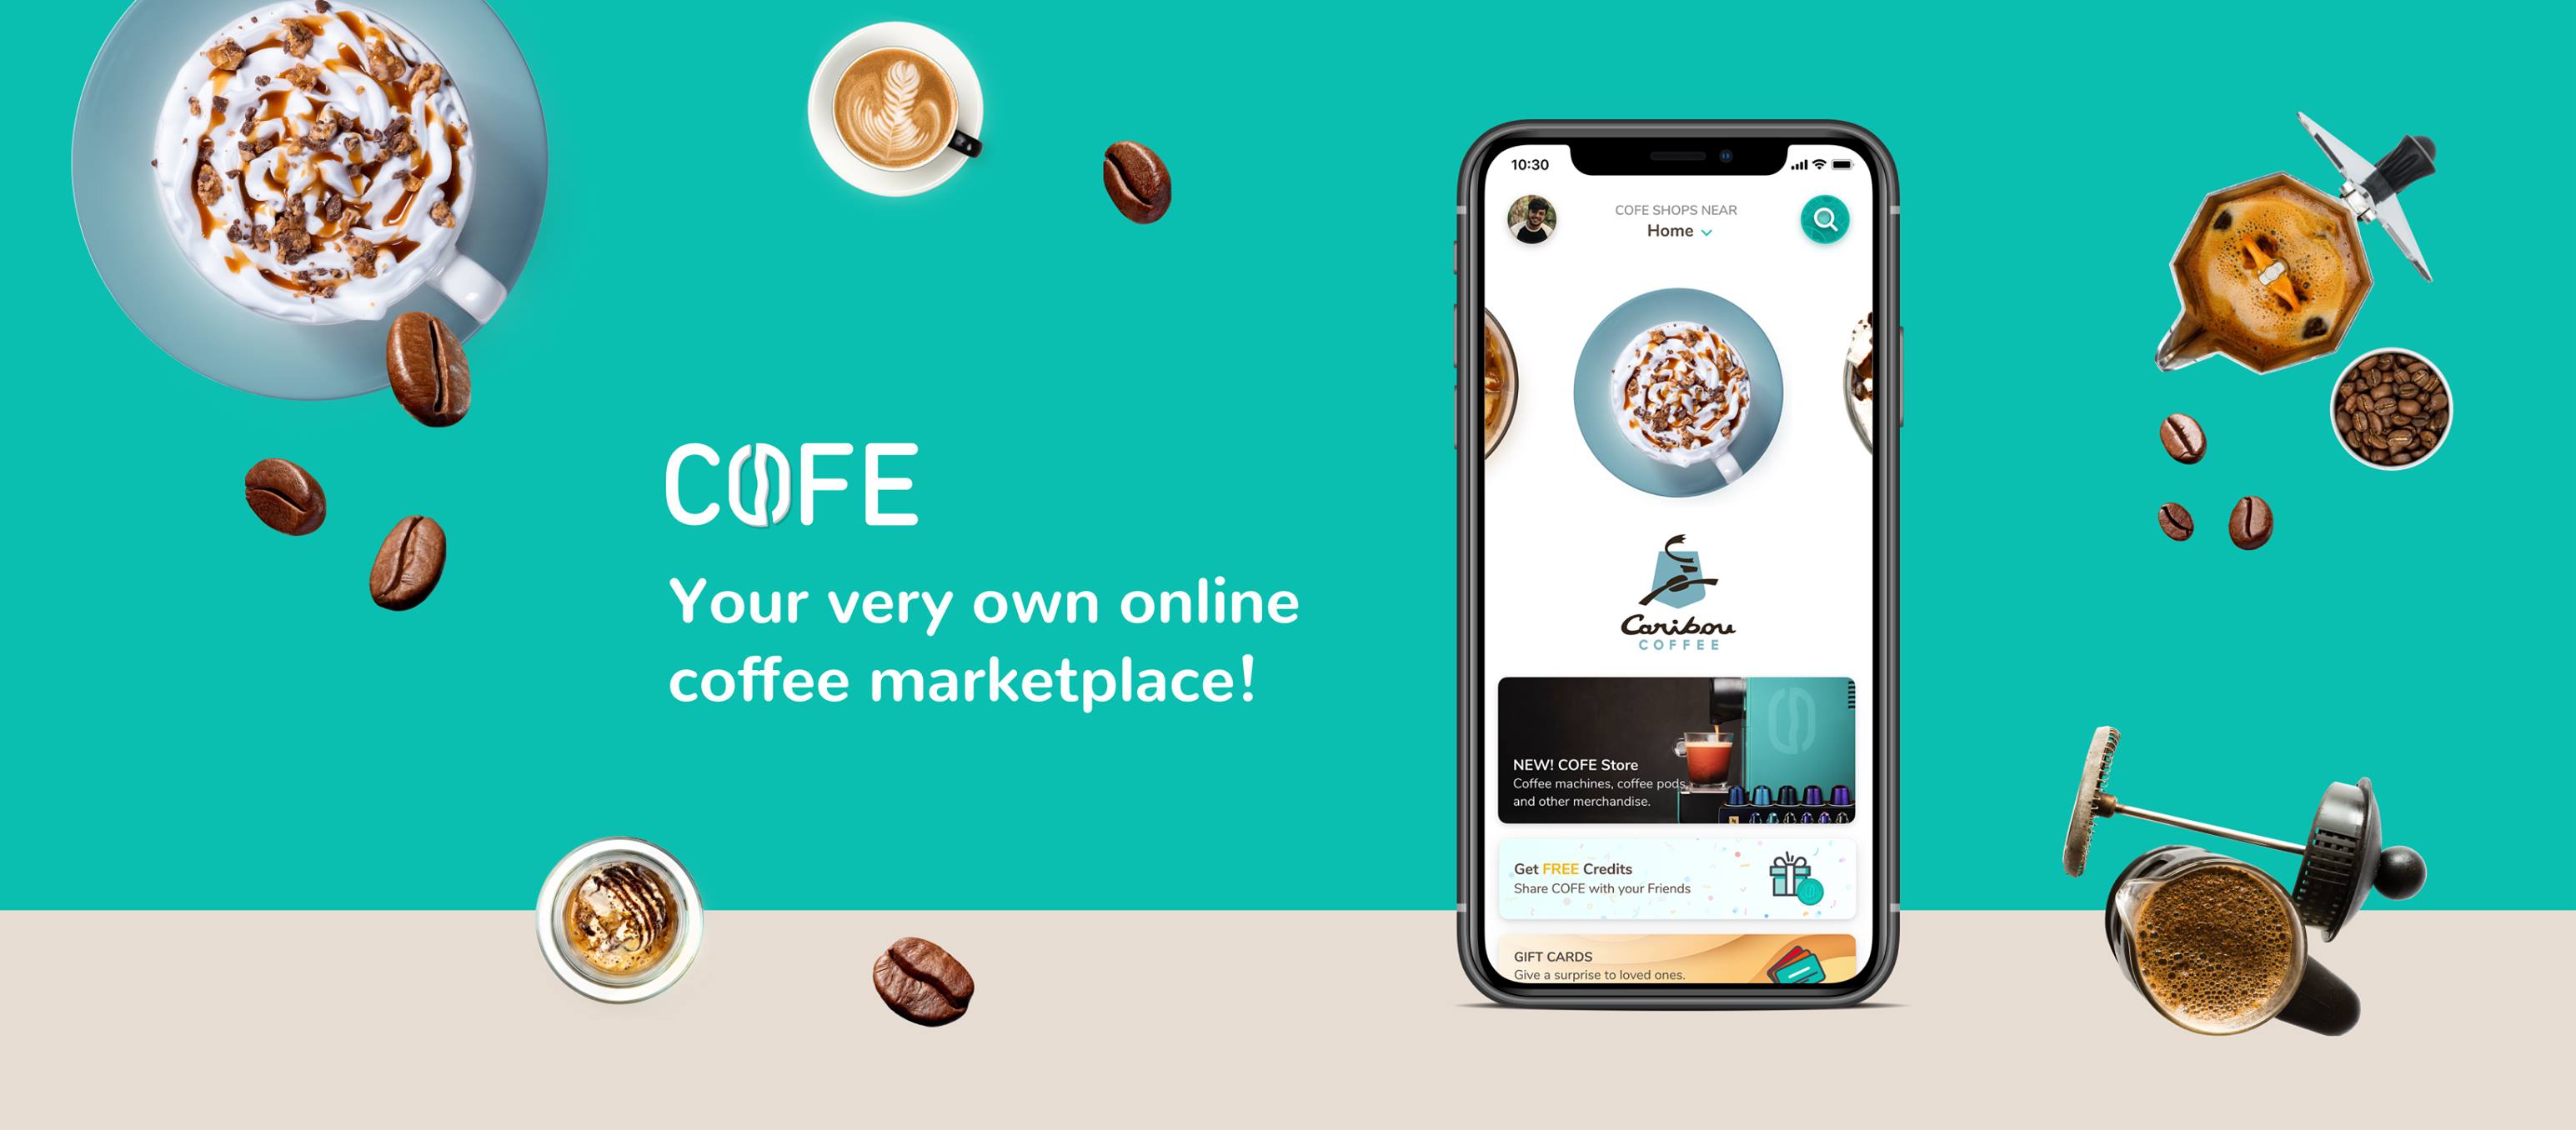 Coffee delivery app COFE raises $10mln, eyes Egypt, Turkey markets